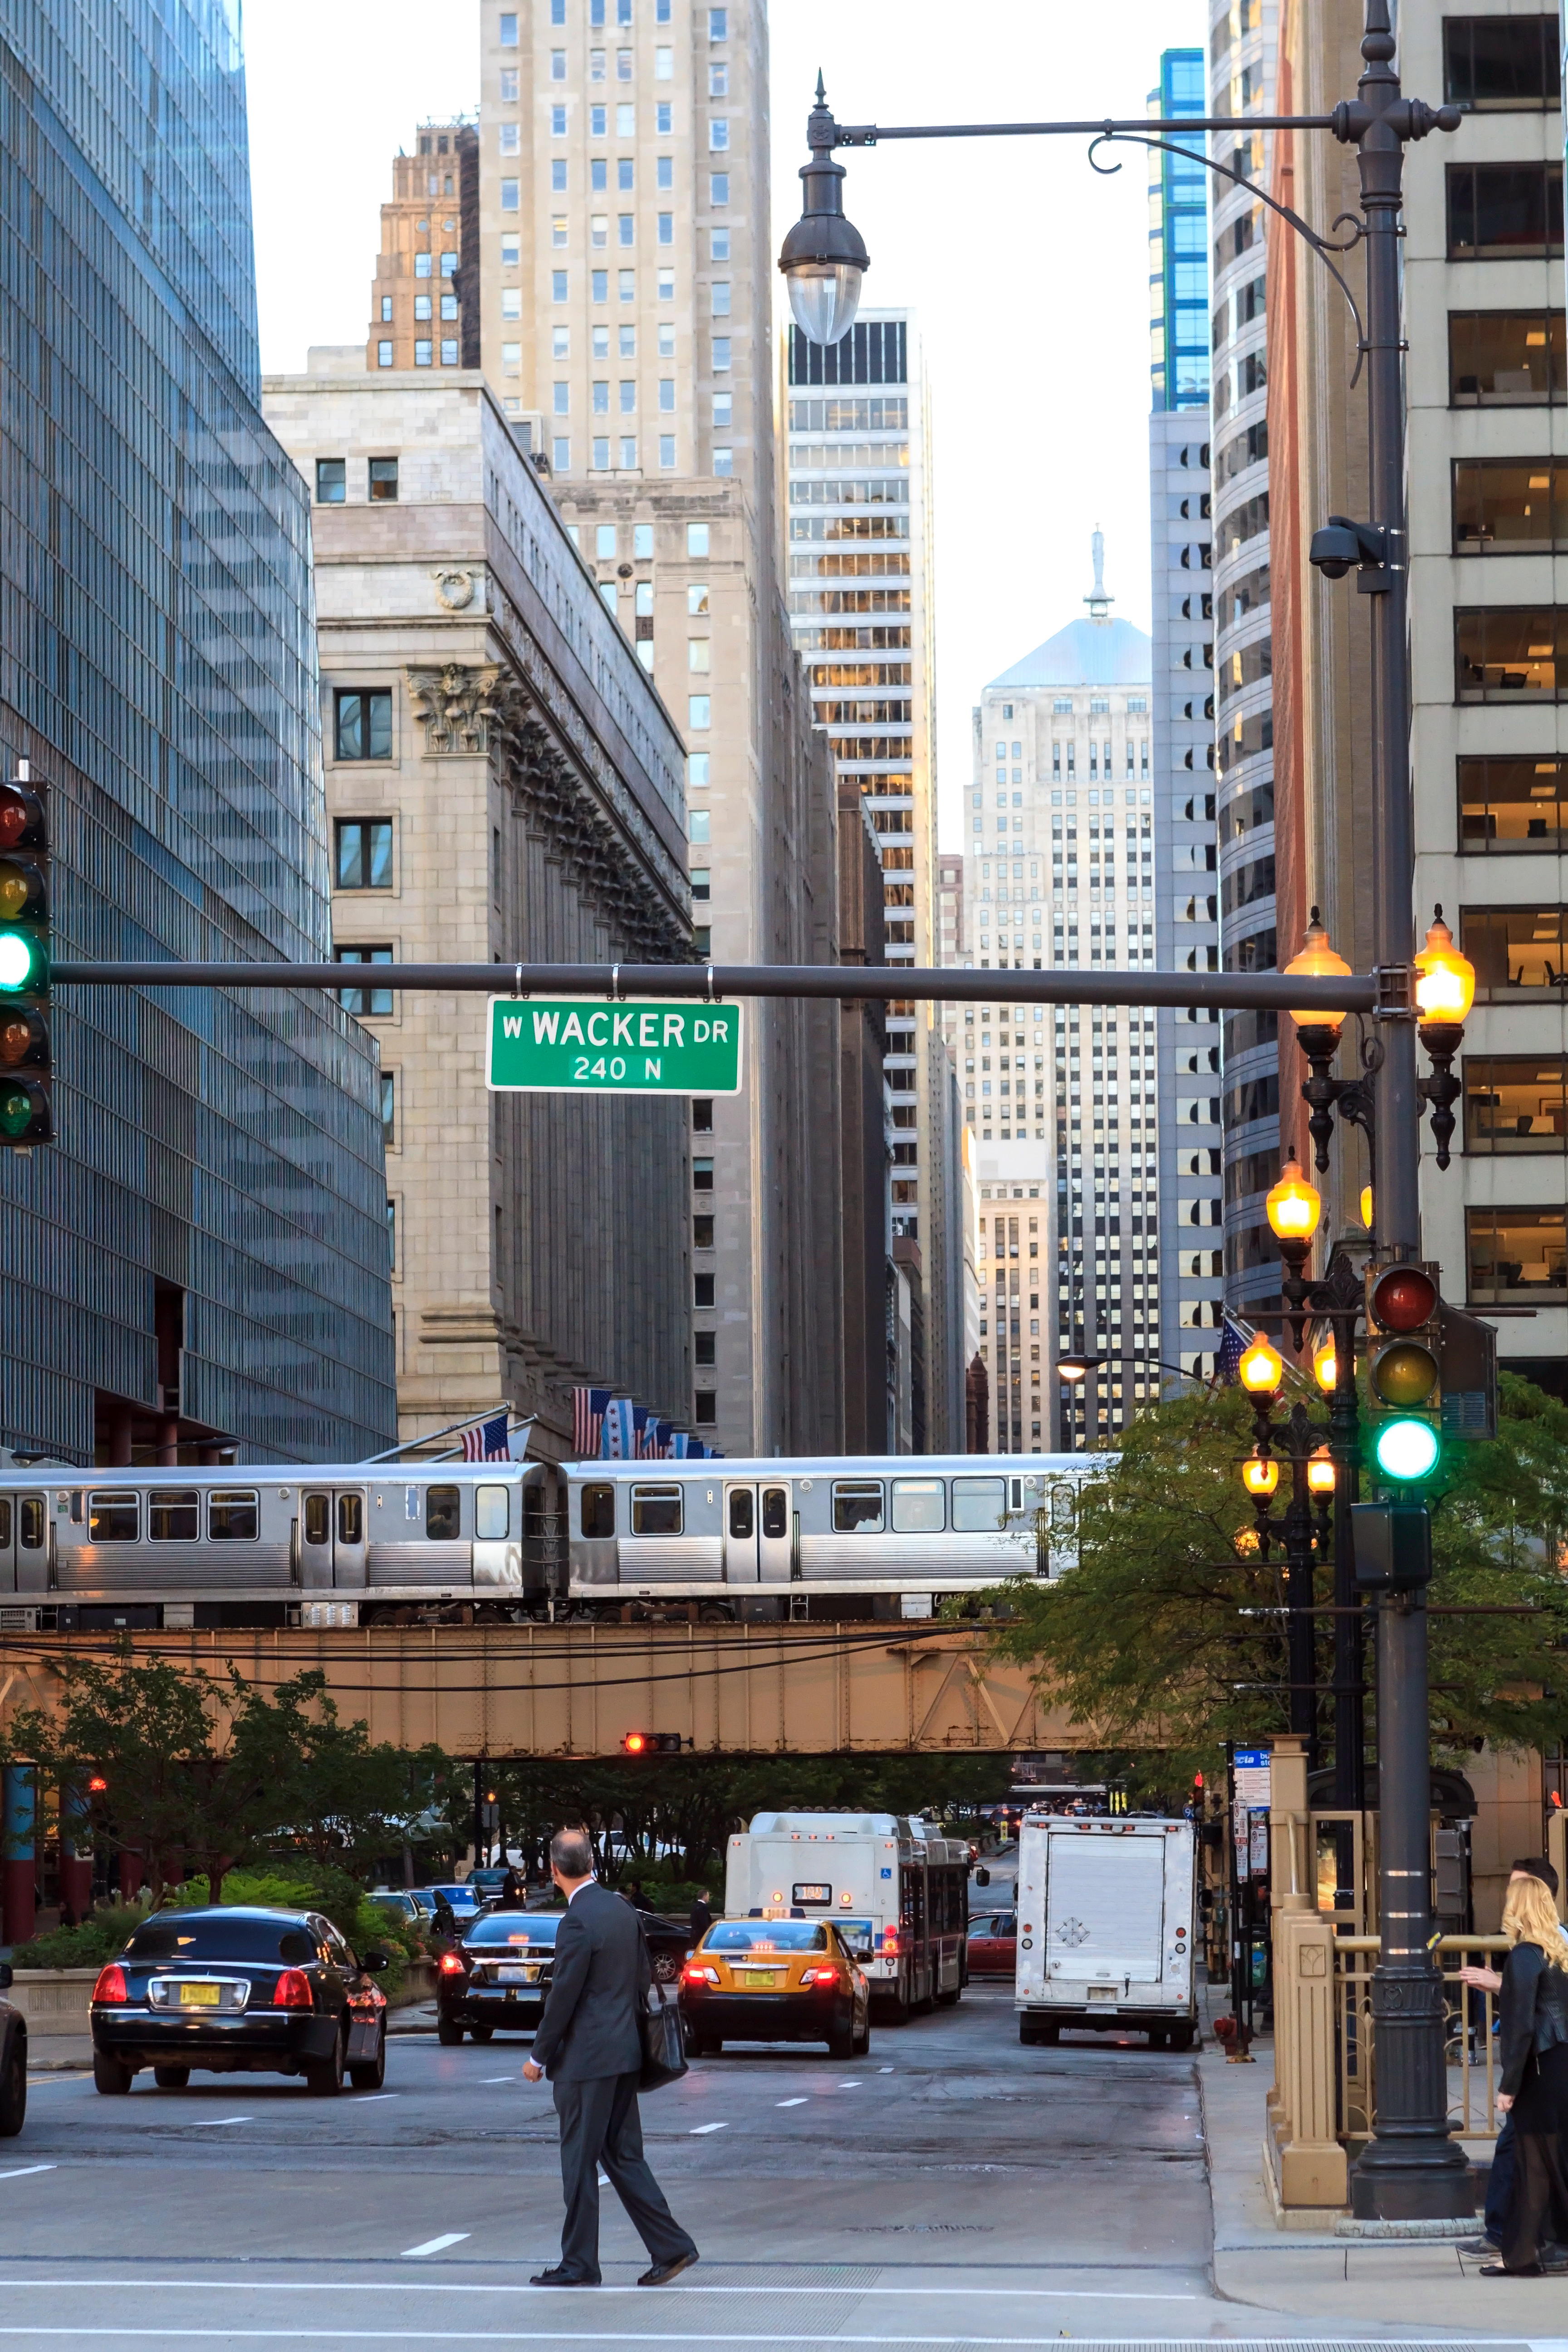 El train crossing North Clark Street, The Loop, Chicago, Illinois, United States of America, North America